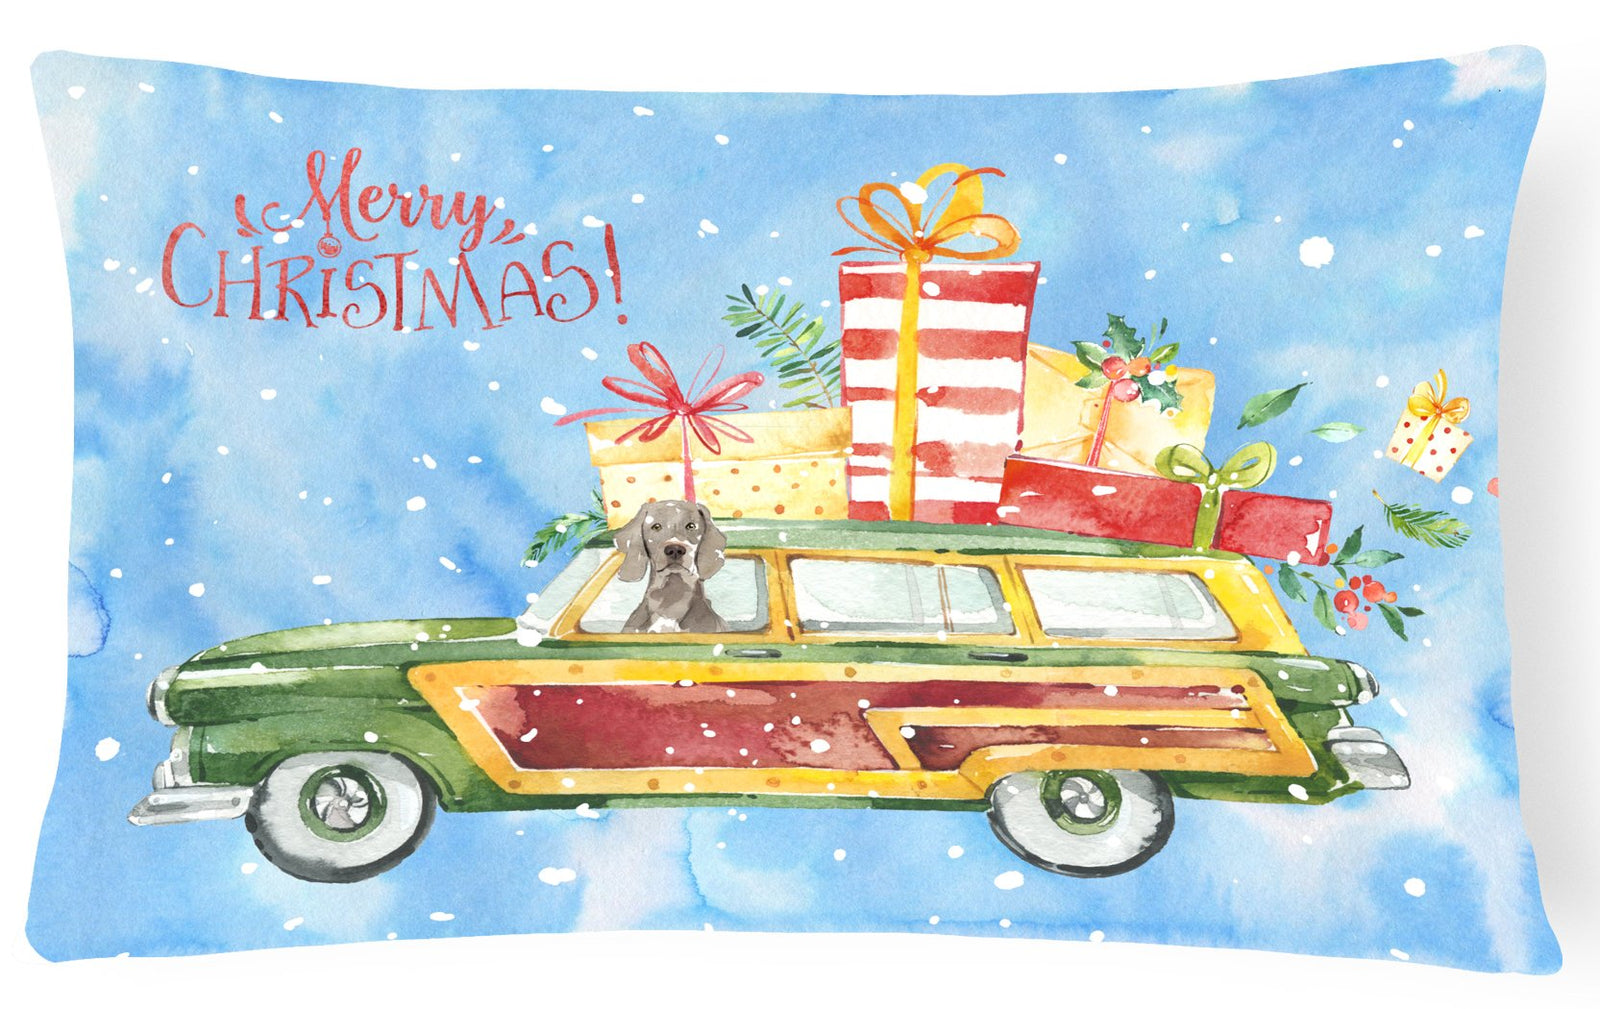 Merry Christmas Weimaraner Canvas Fabric Decorative Pillow CK2426PW1216 by Caroline's Treasures